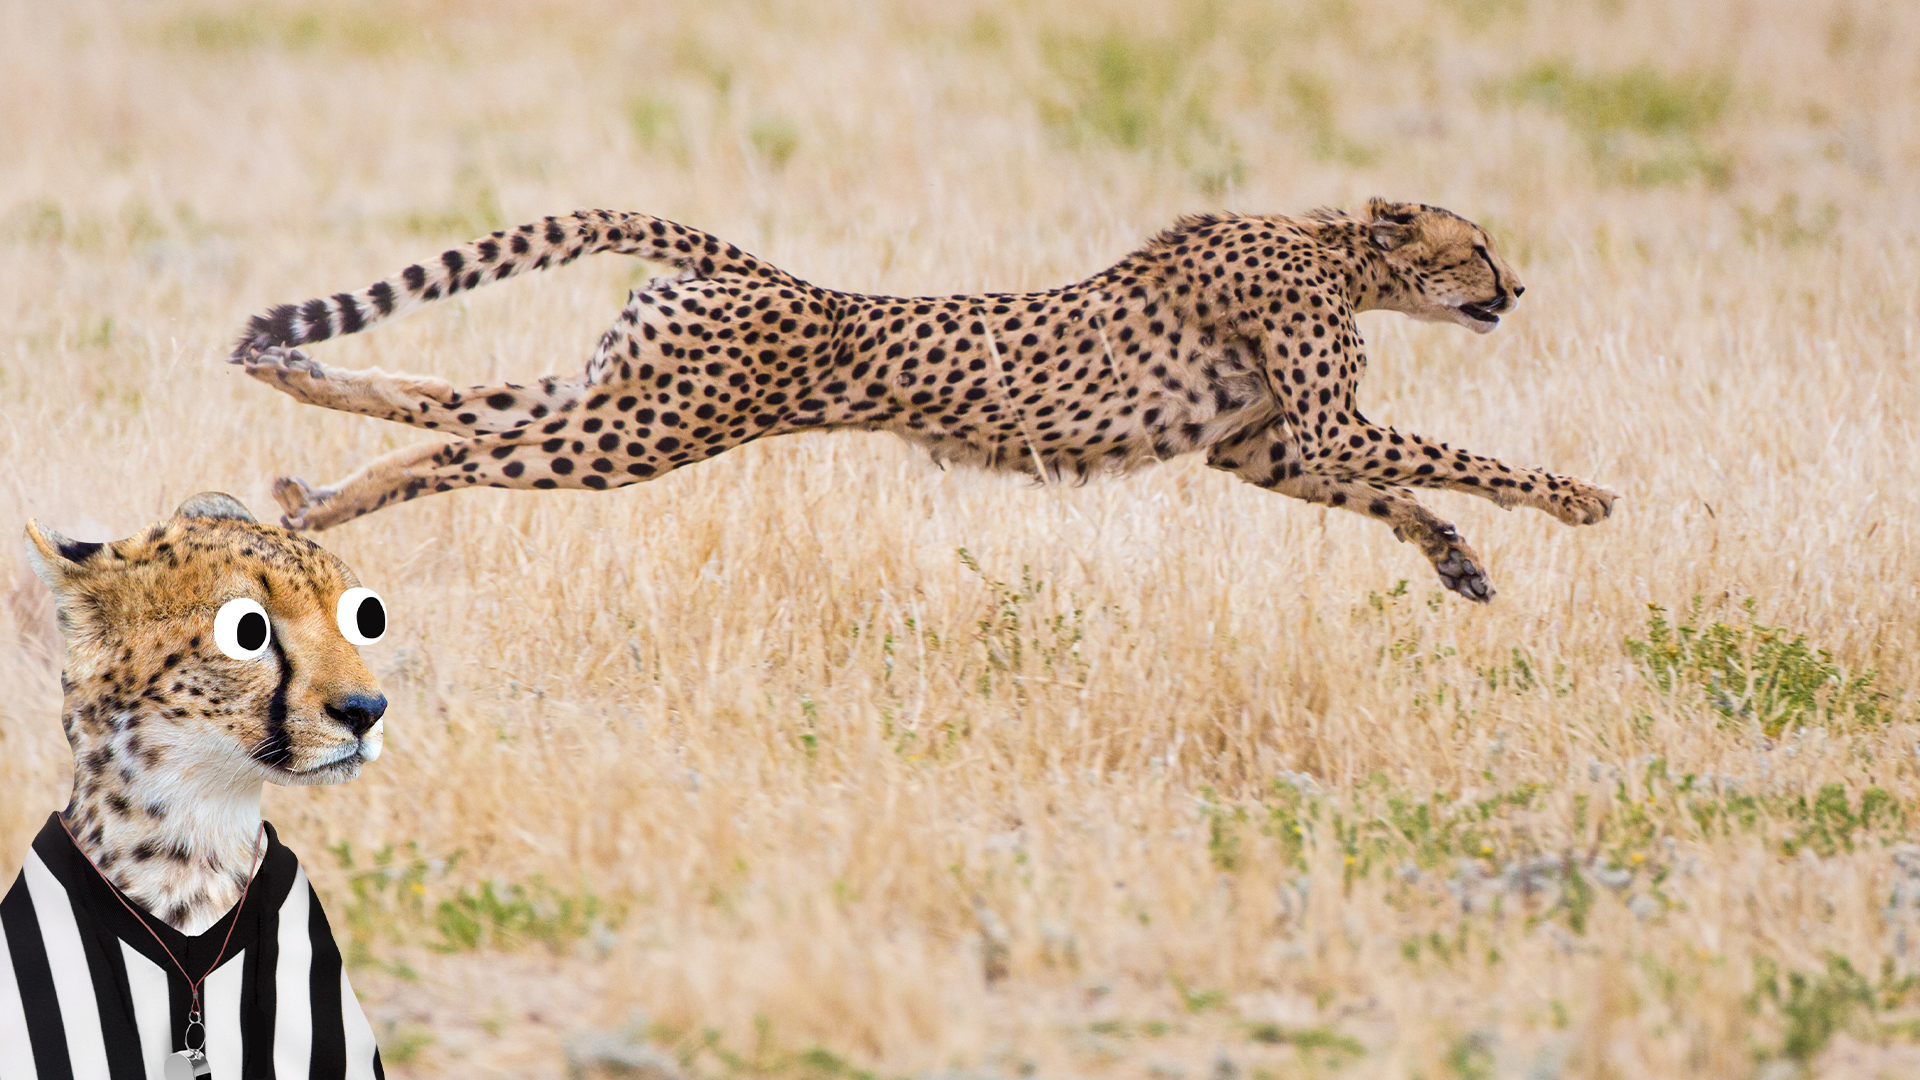 Running cheetah and surprised looking cheetah referee